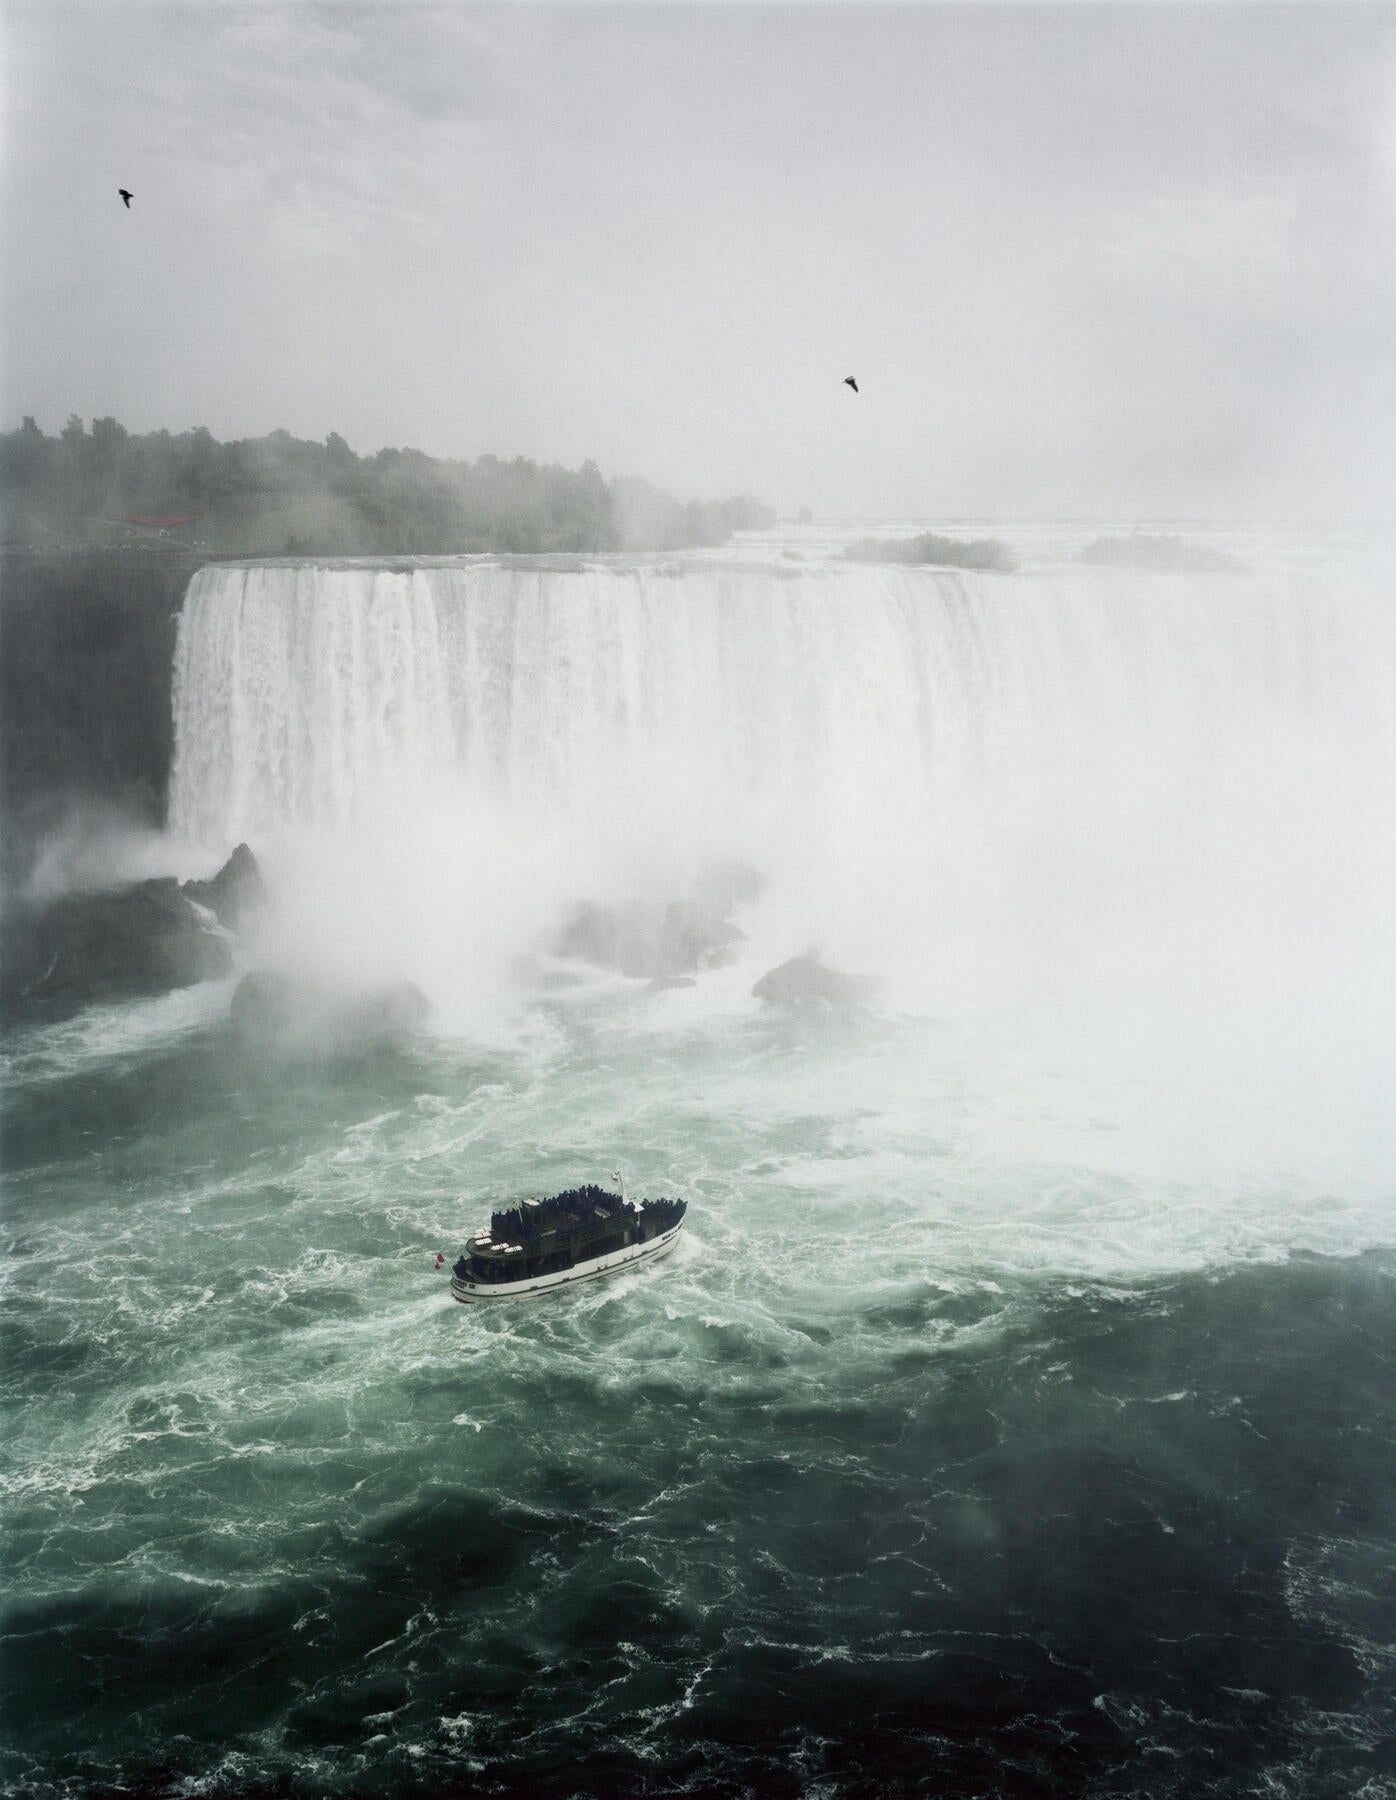 Andreas Gursky — Fotografien 1984 bis Heute